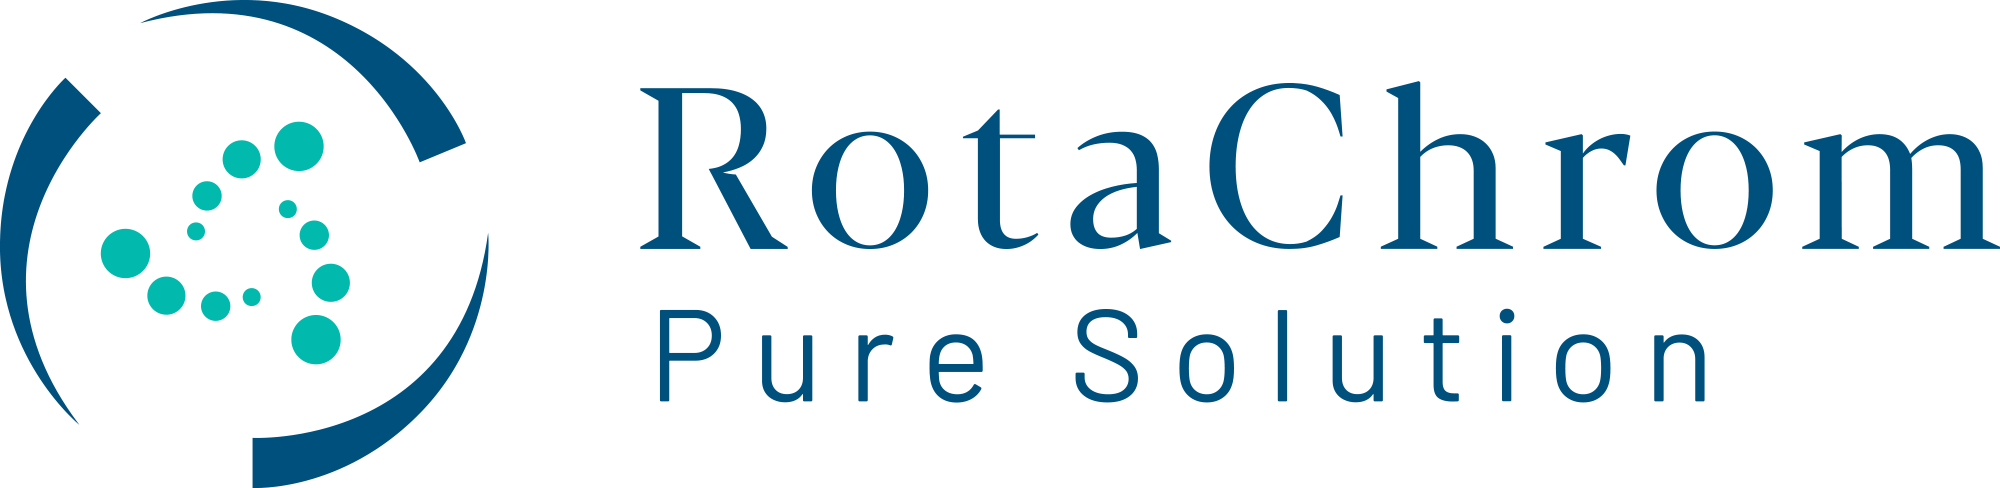 rotachrom logo png